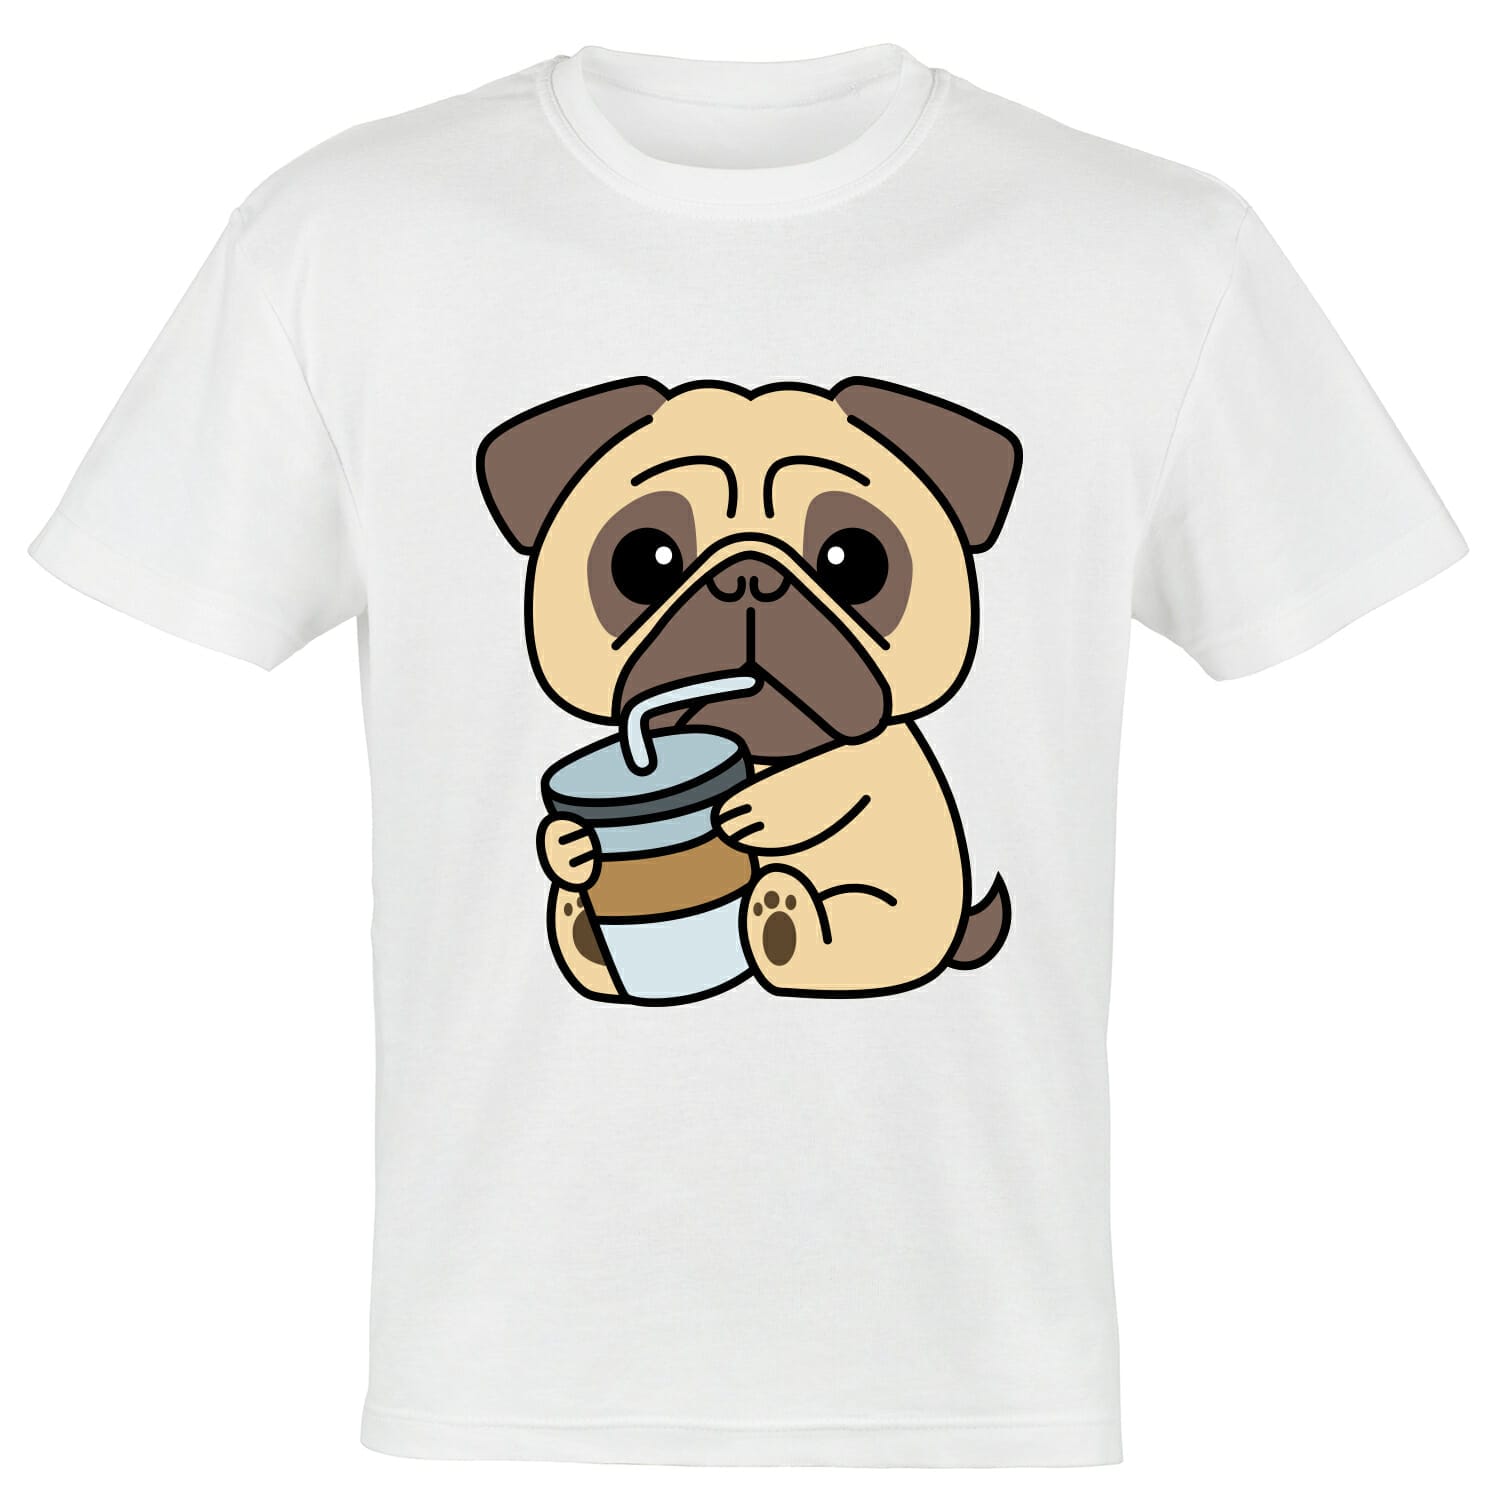 Pug Drinking Milkshake t shirt design